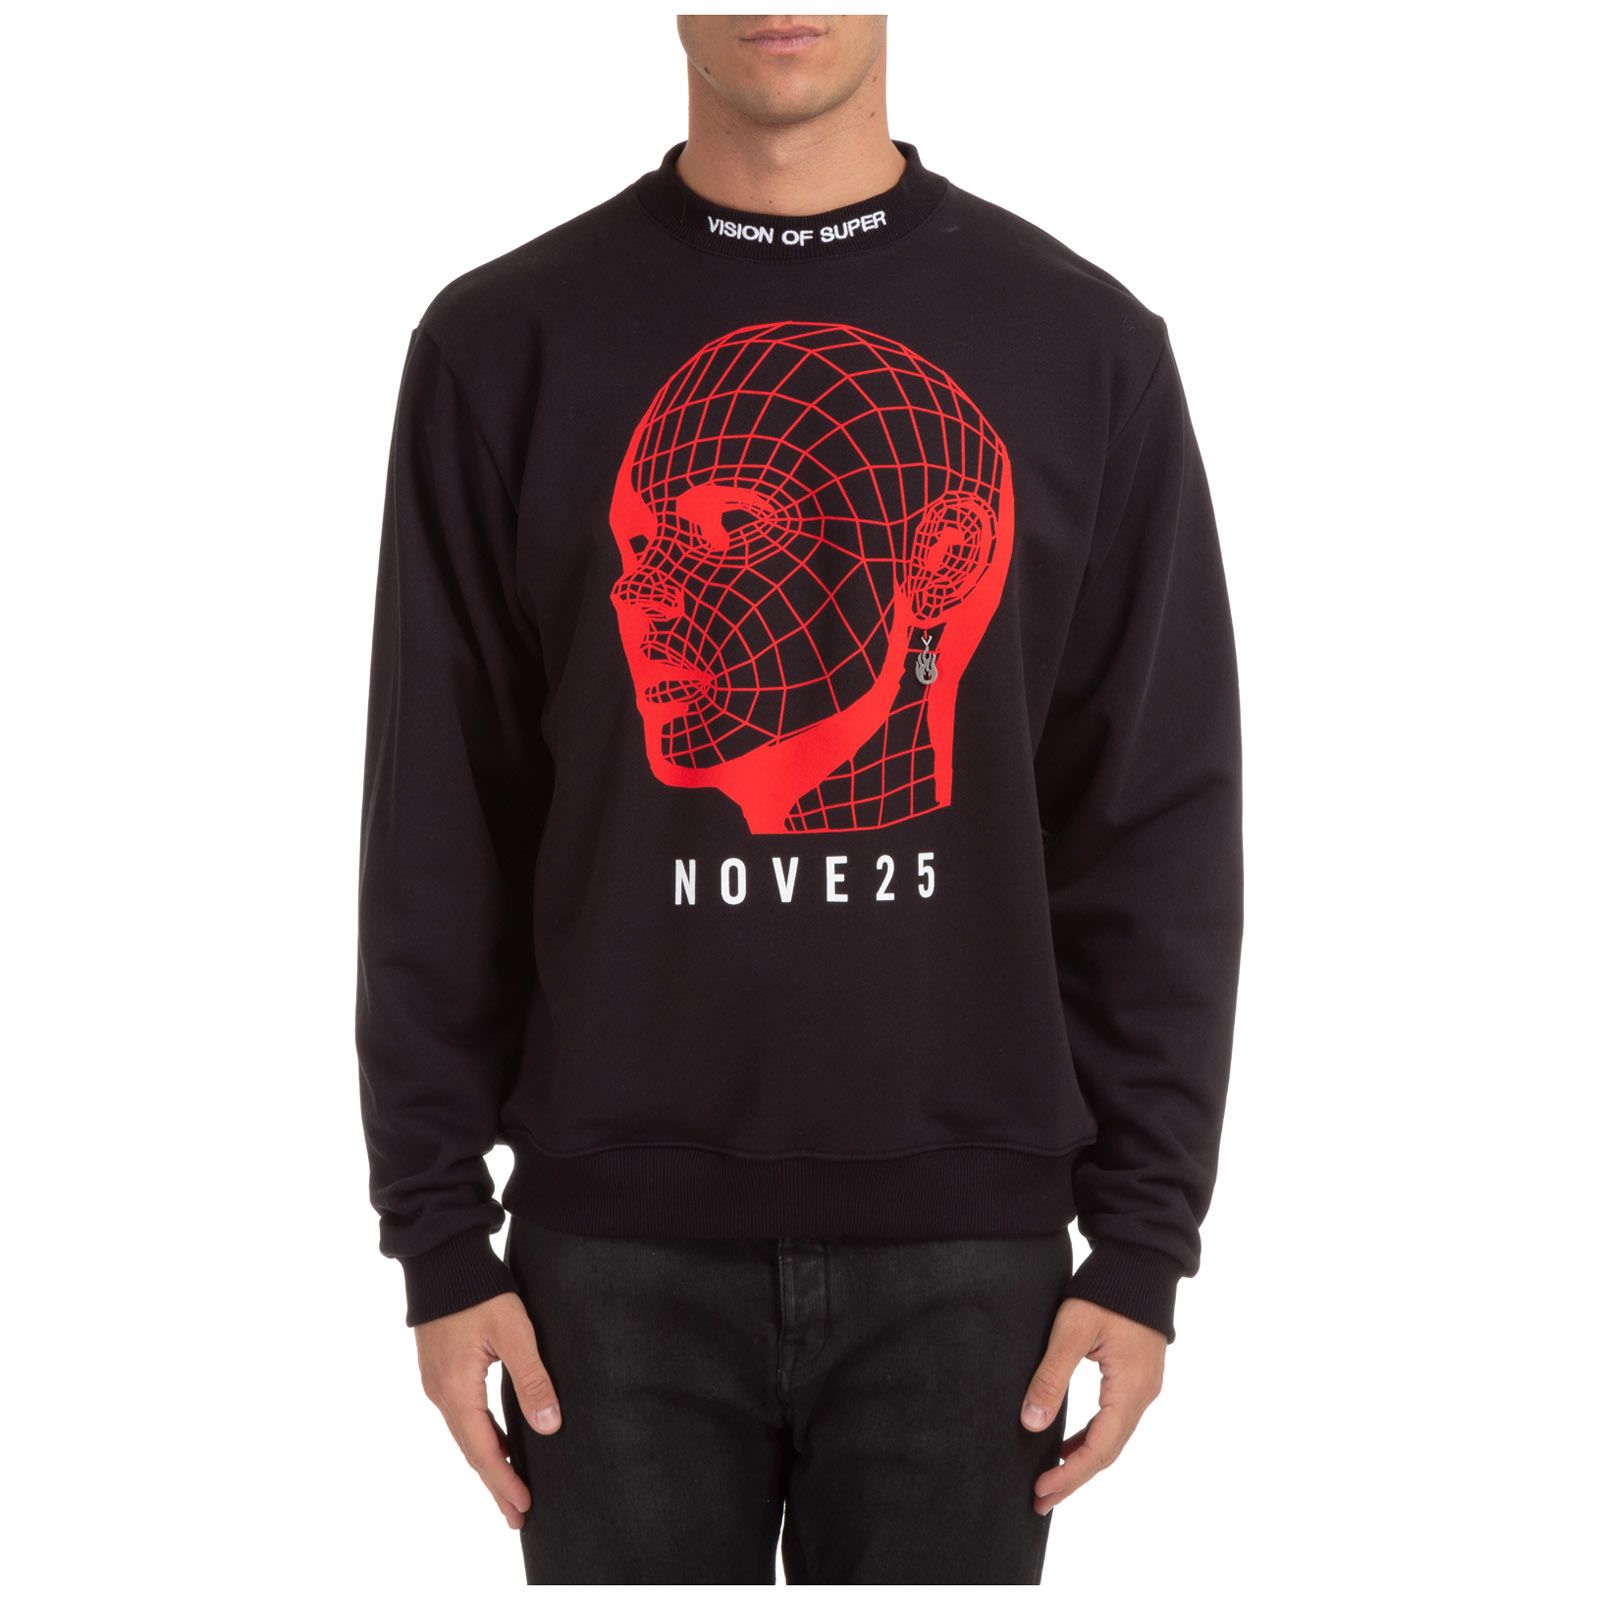 Vision Of Super Nove25 Sweatshirt